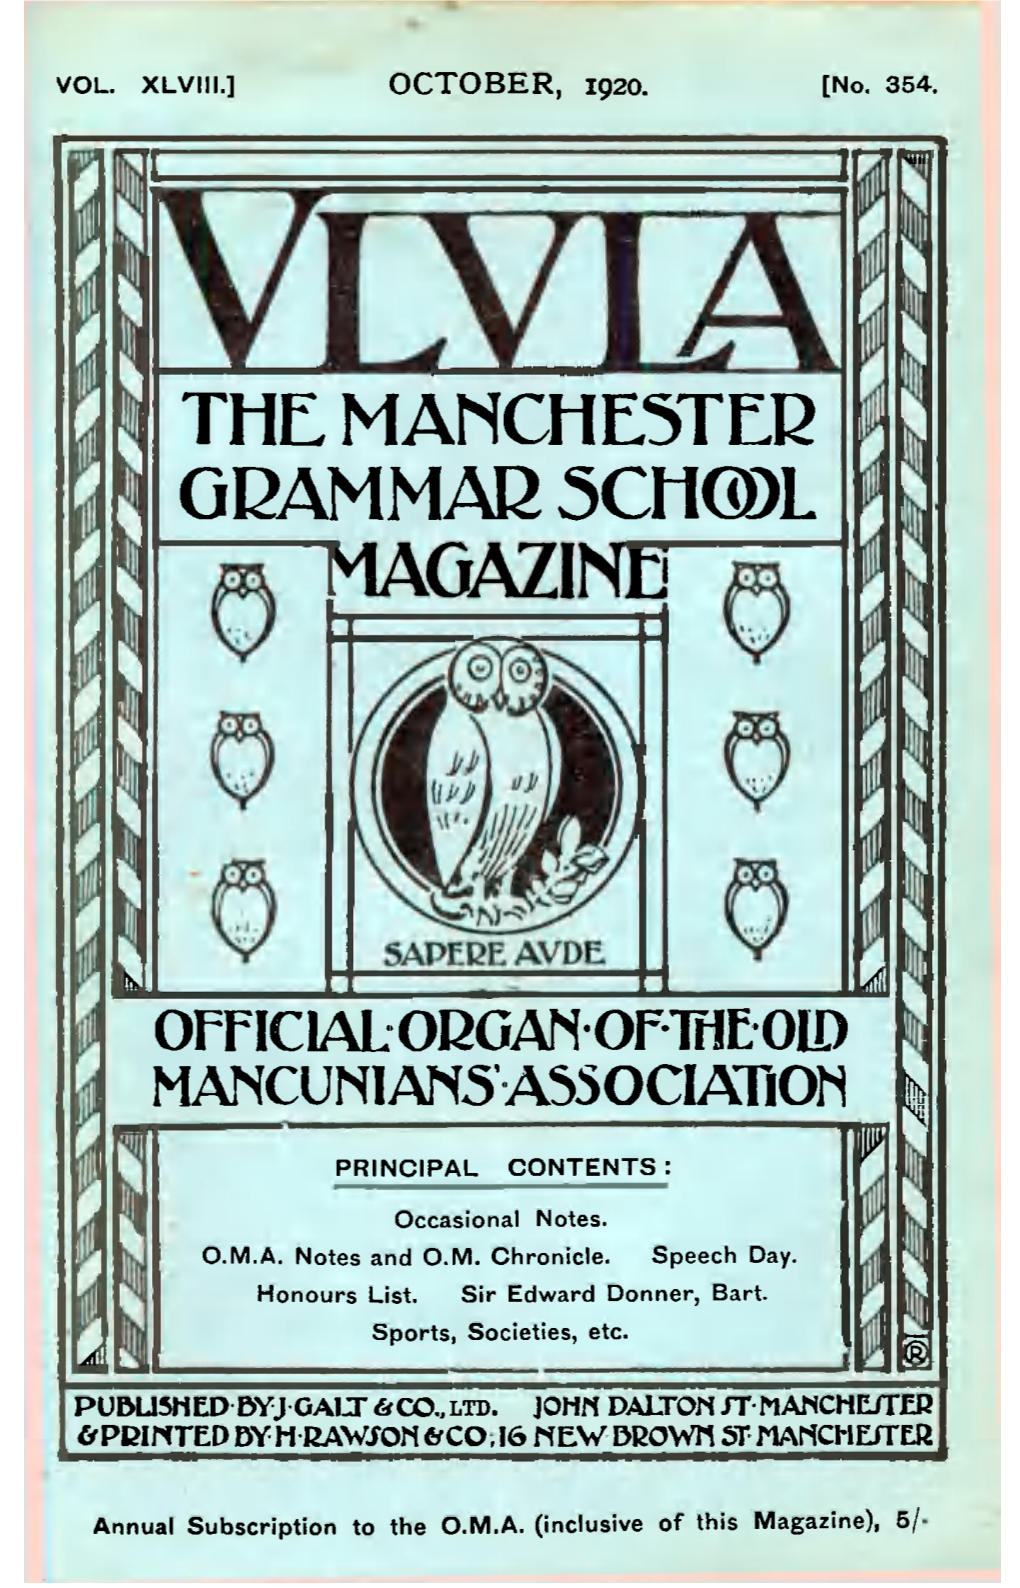 The. Manchester Grammar 5Chgdl "Magazinet \